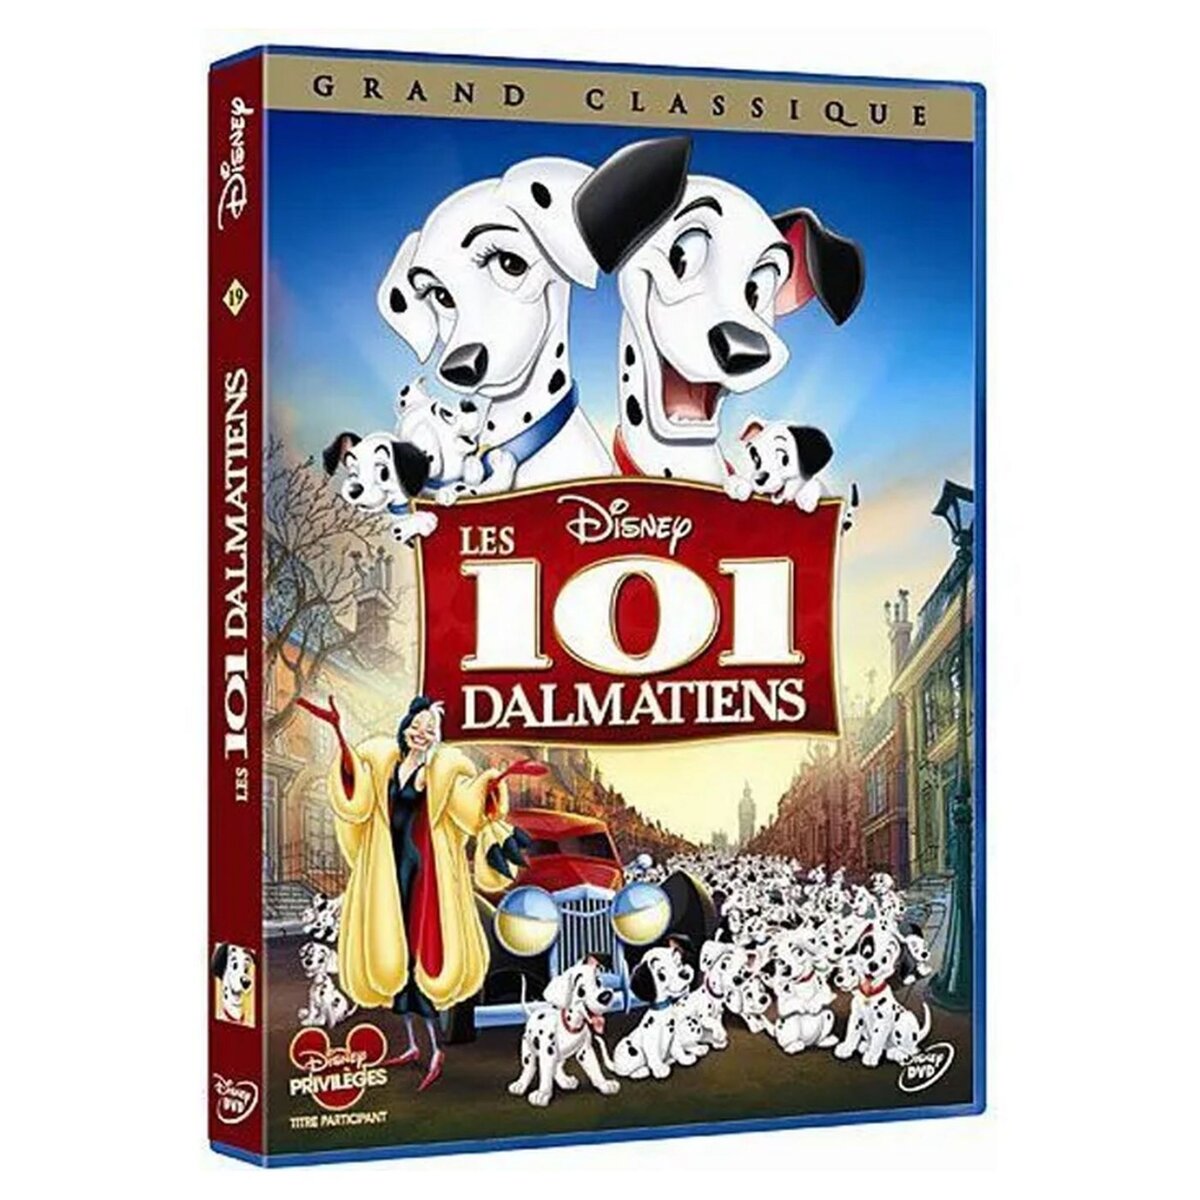 Les 101 dalmatiens DVD (1961)